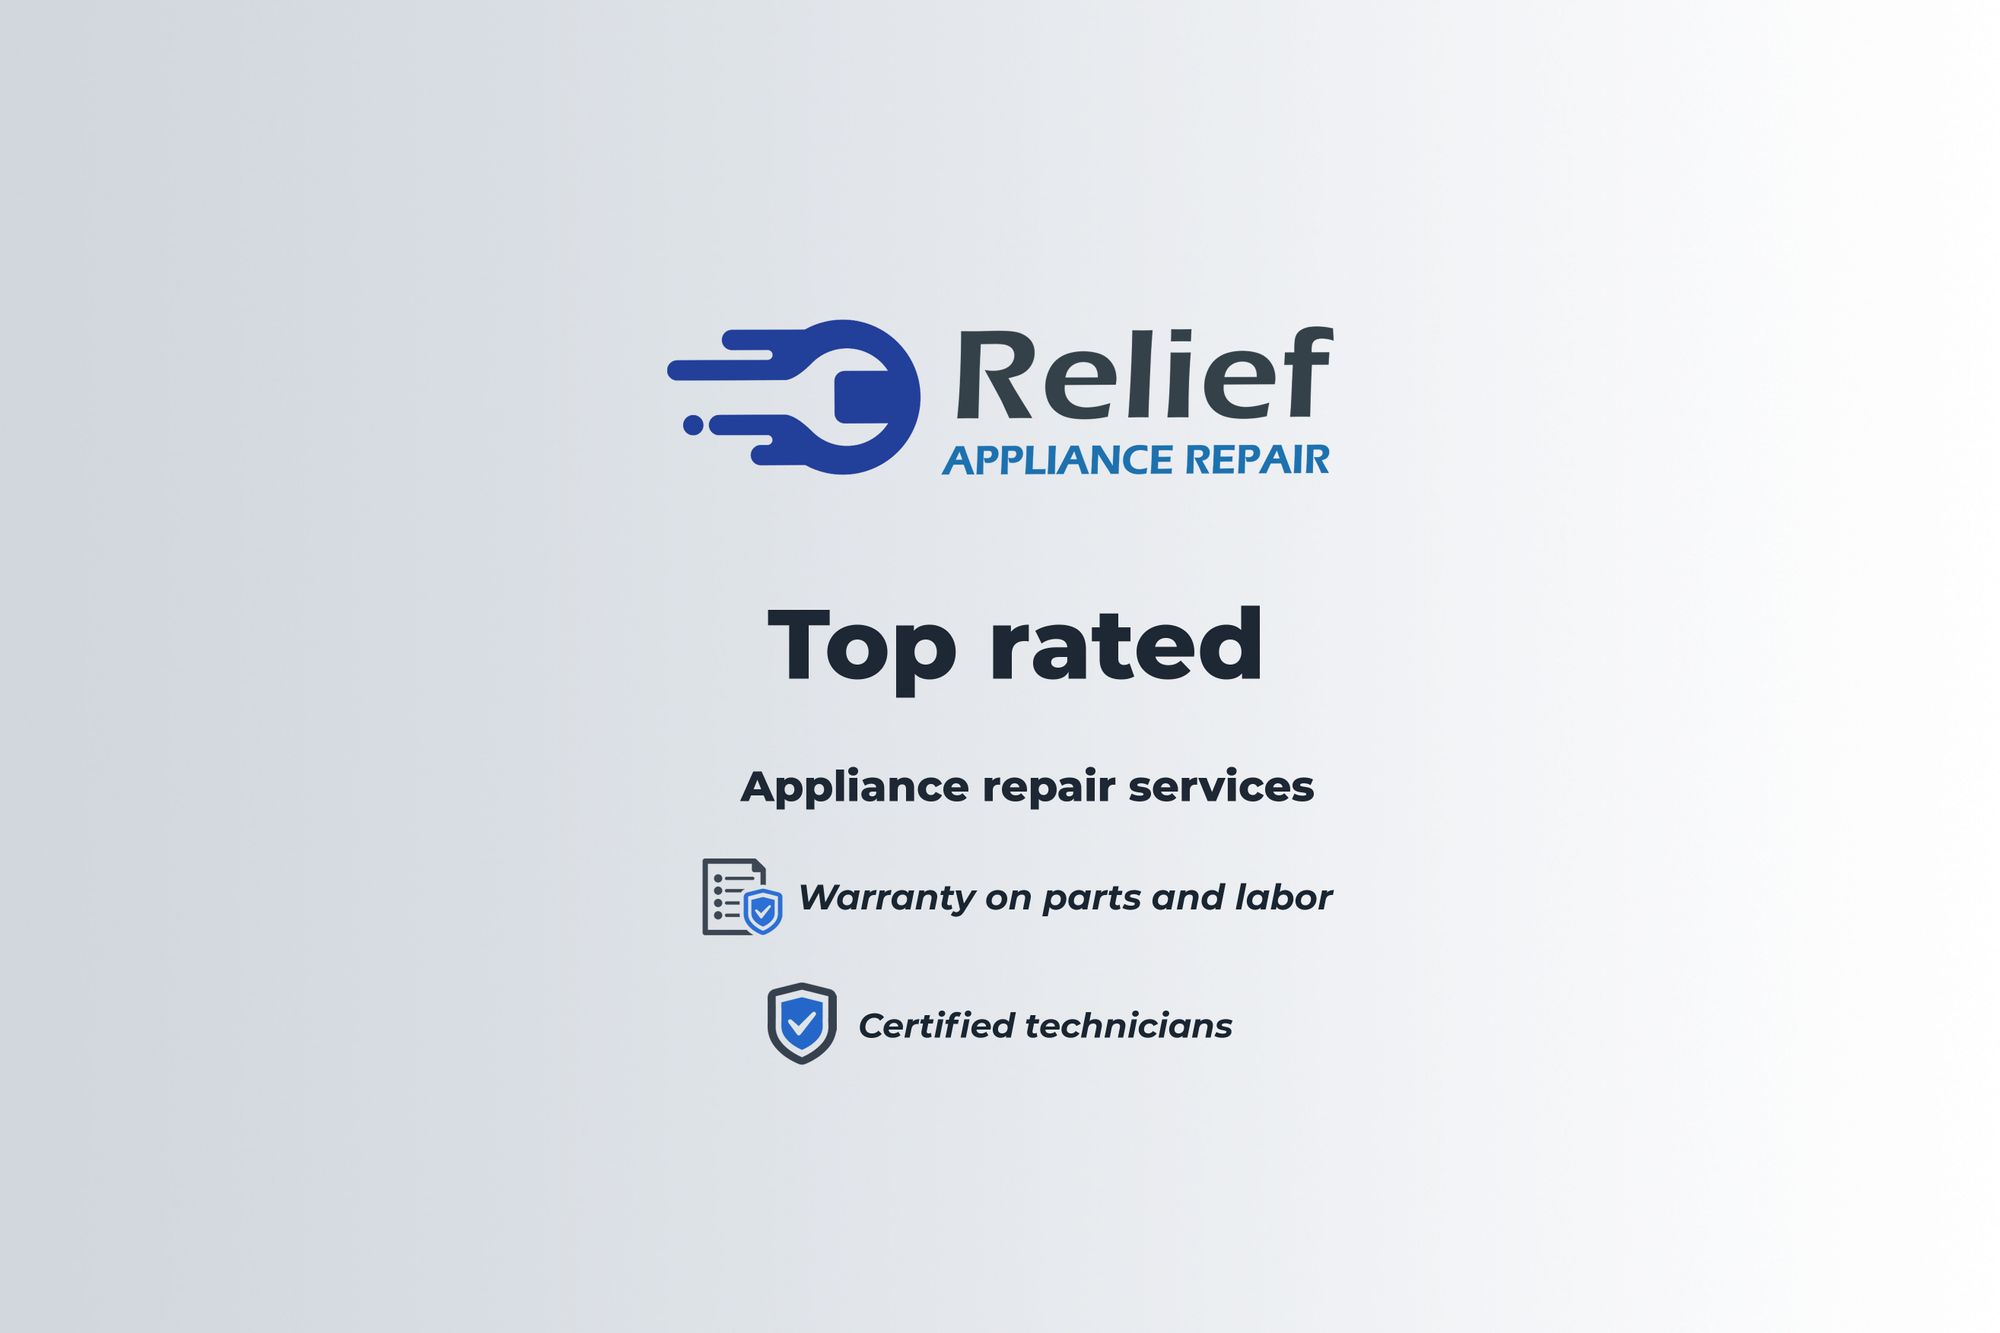 Relief Appliance Repair